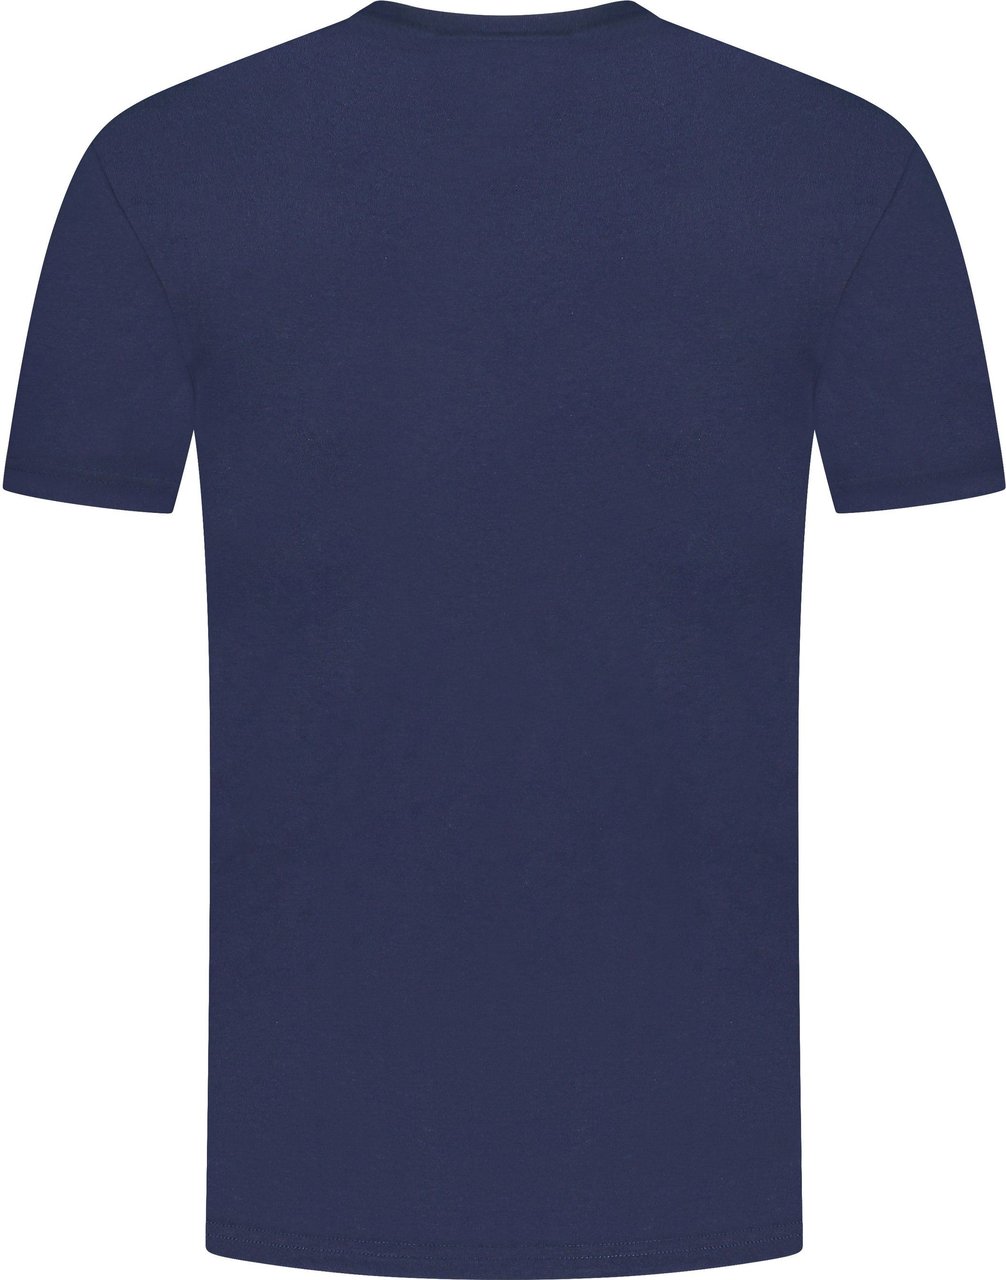 Lyle & Scott T-shirt Blauw Blauw